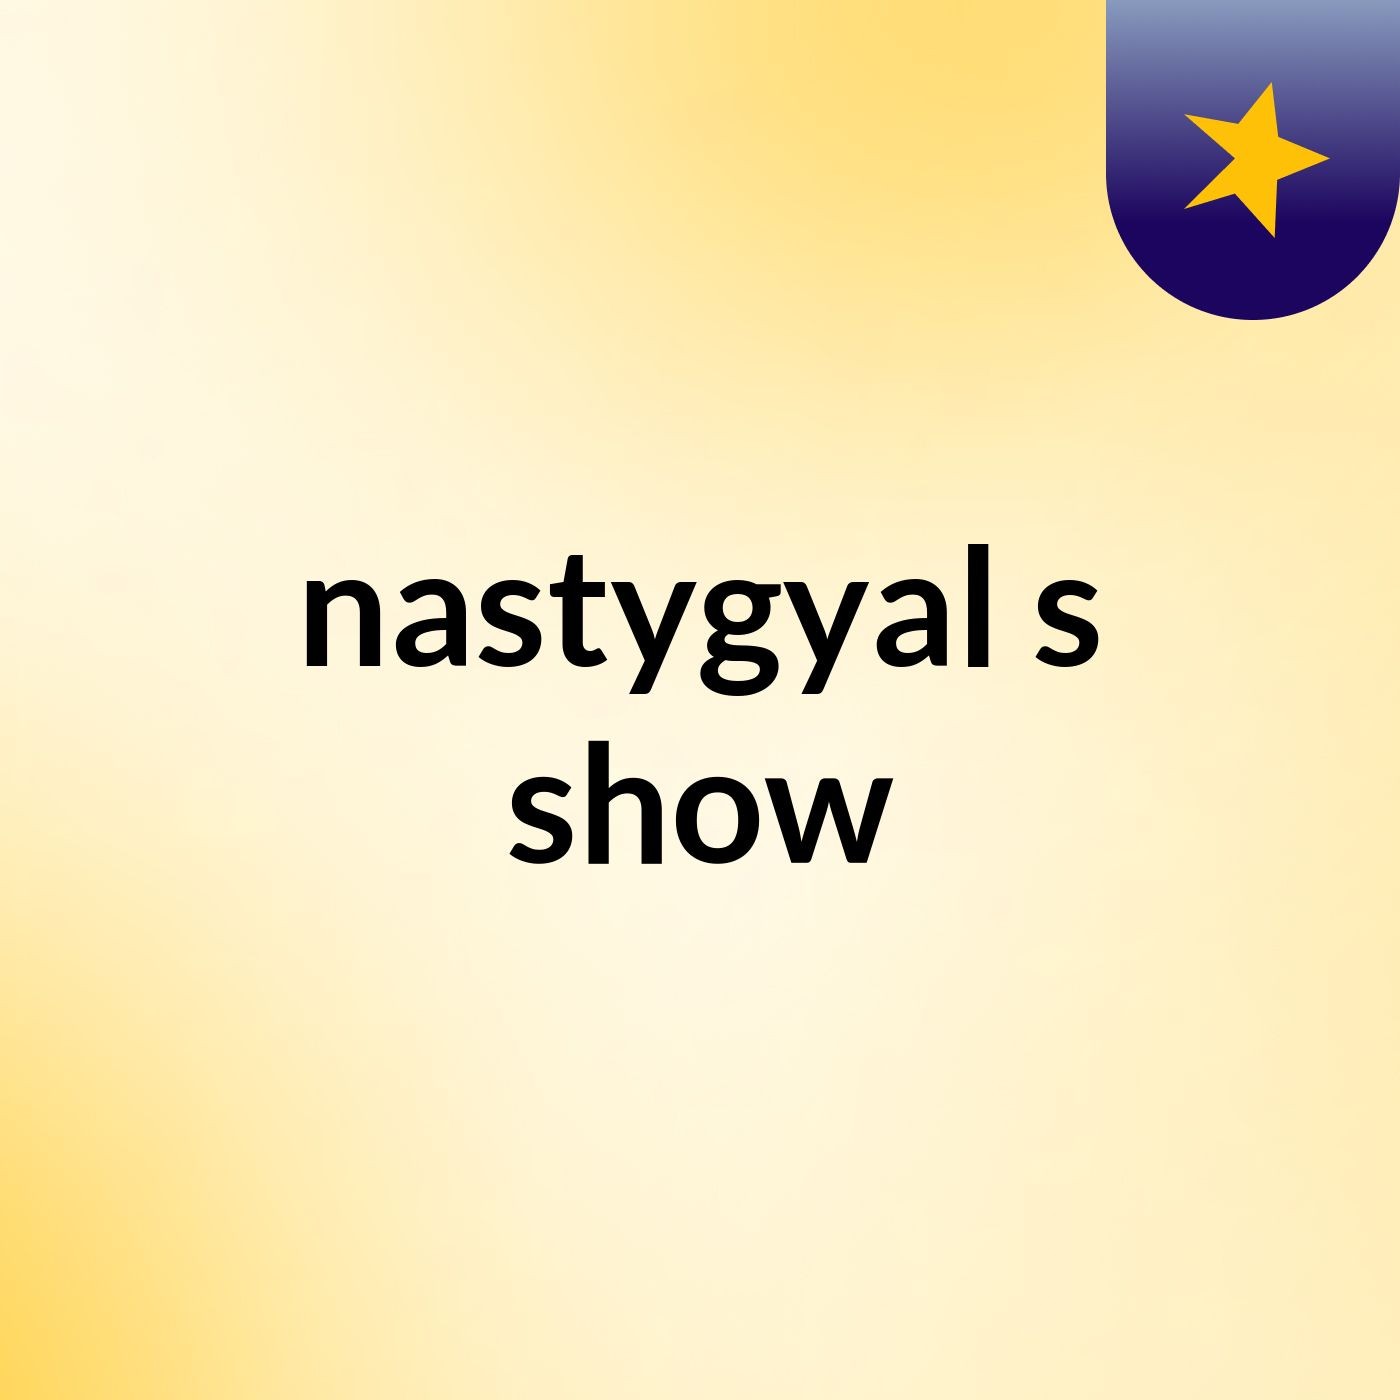 nastygyal's show